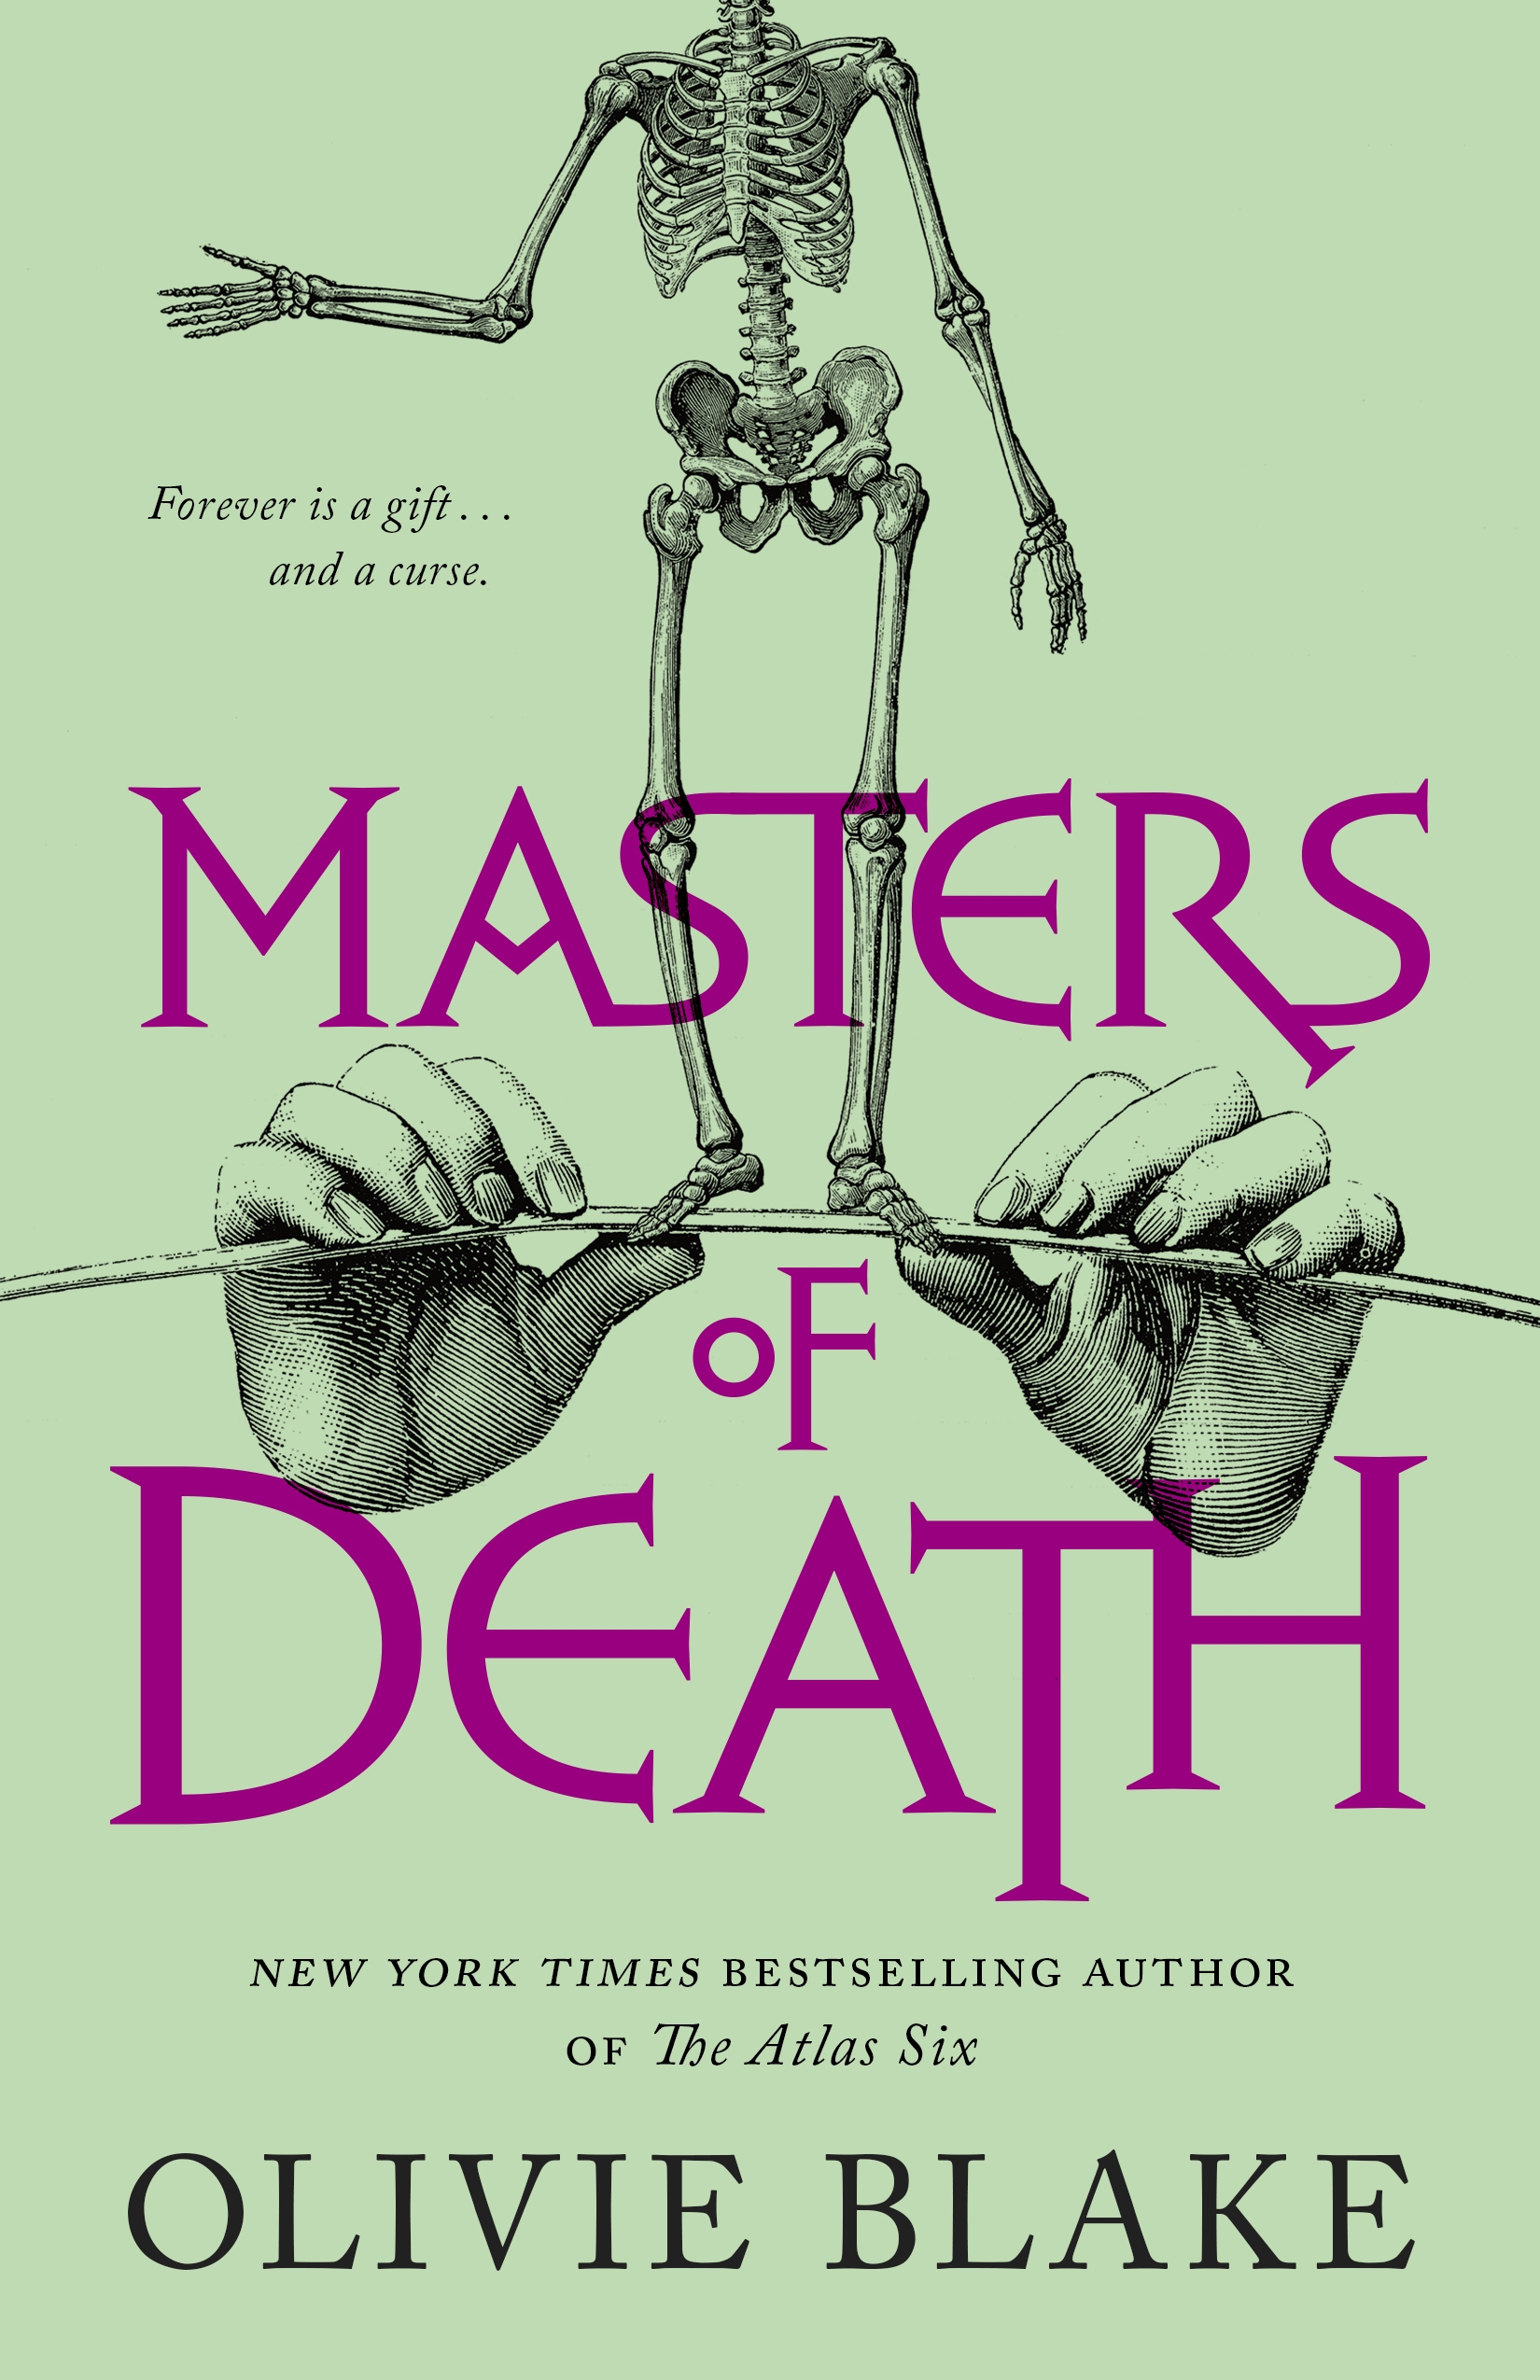 Masters of Death : A Novel by Olivie Blake